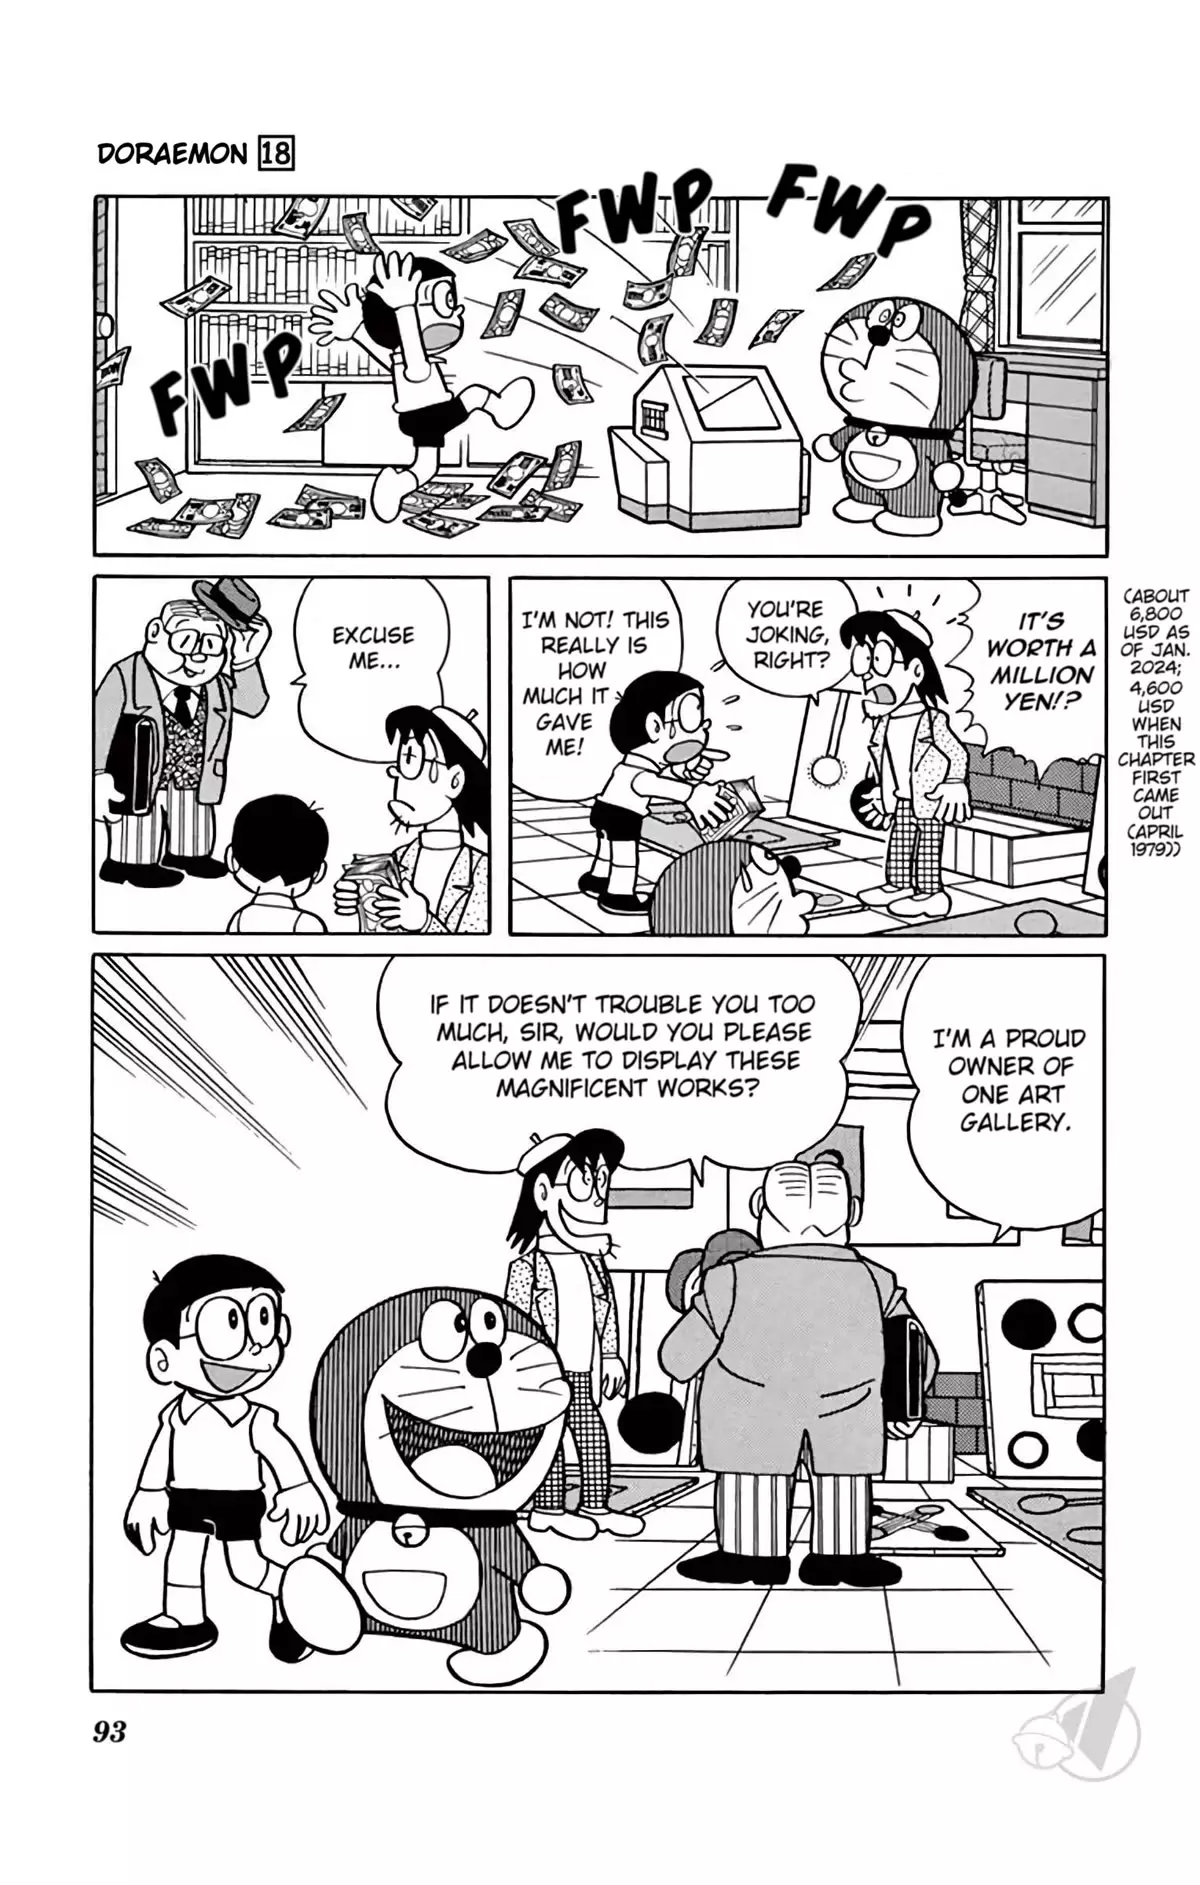 Doraemon - 330 page 8-17a28b07